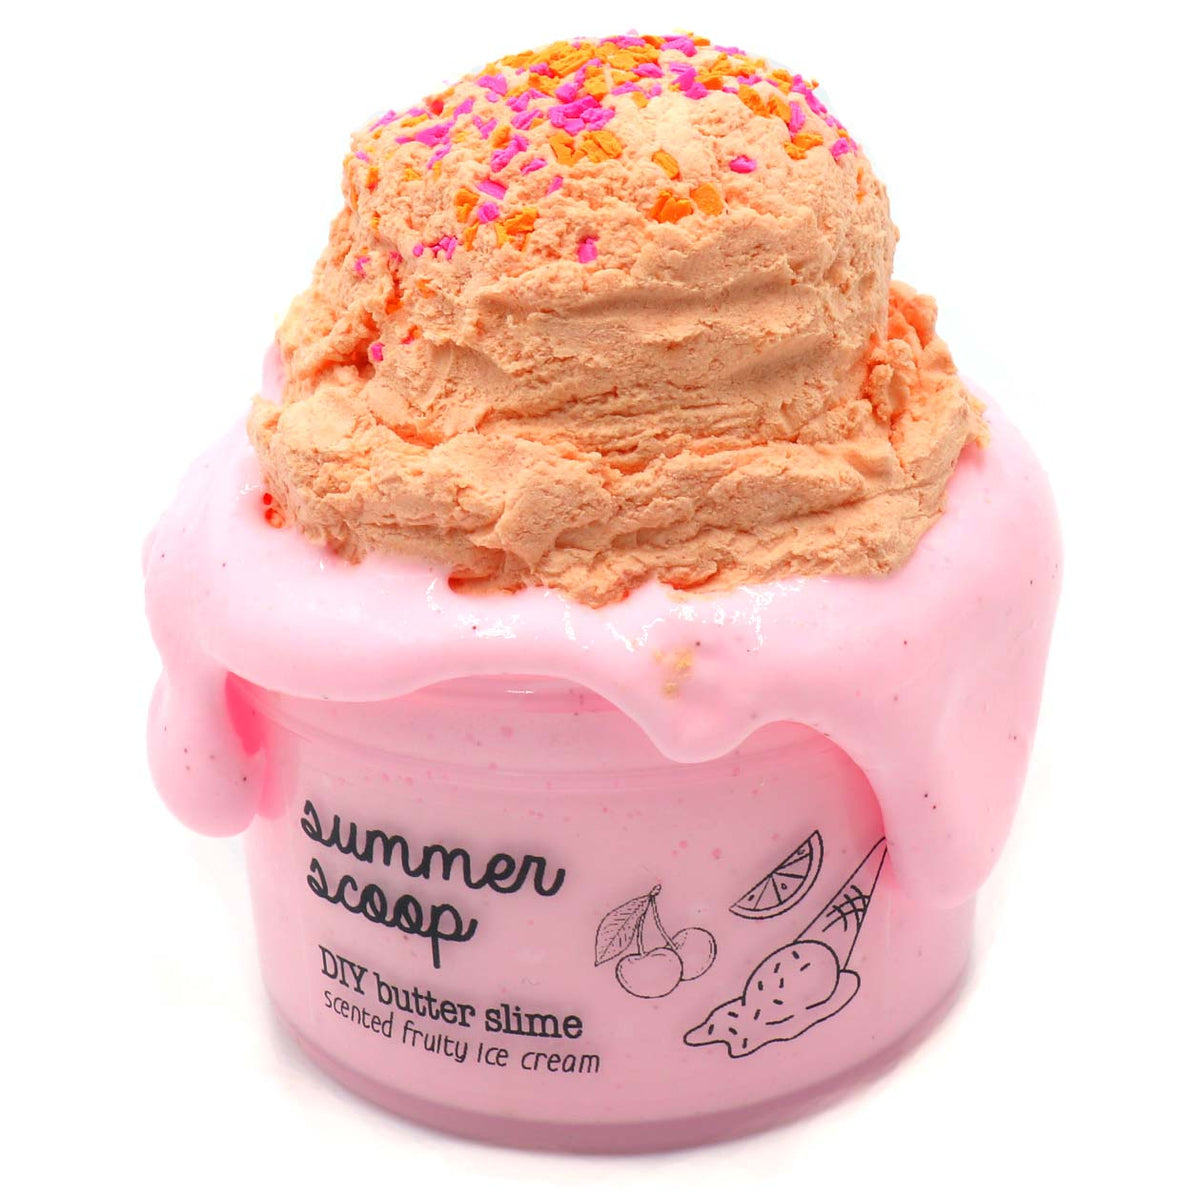 Summer Scoop Ice Cream Orange Pink Fruity Cherry Sprinkles DIY Butter Slime Fantasies Shop 7oz Front View 